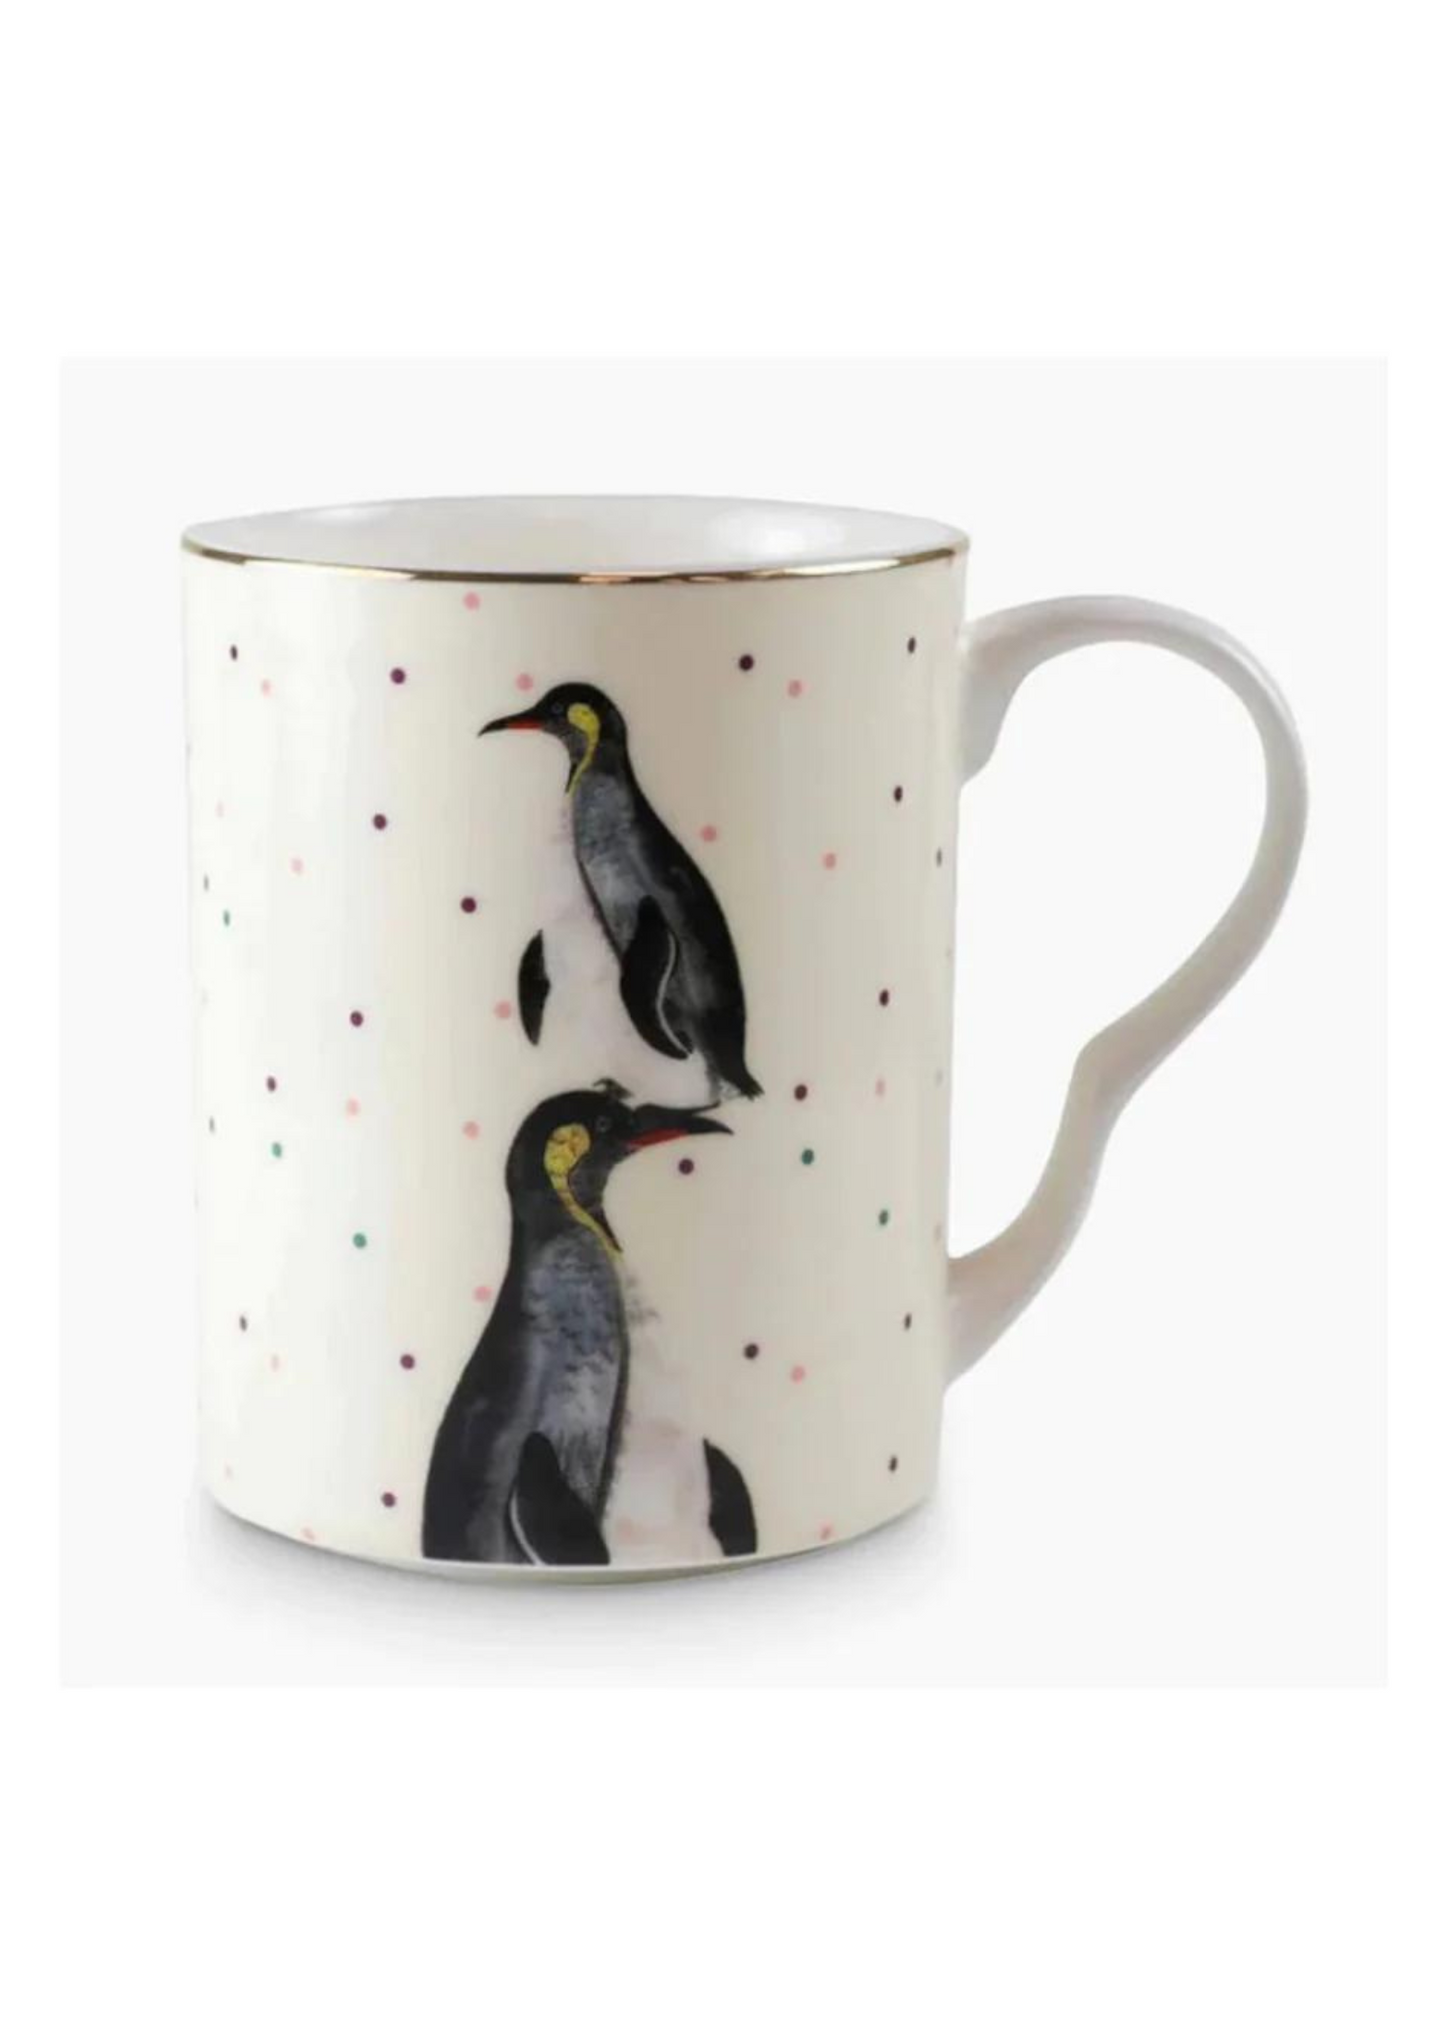 Mug - Penguins